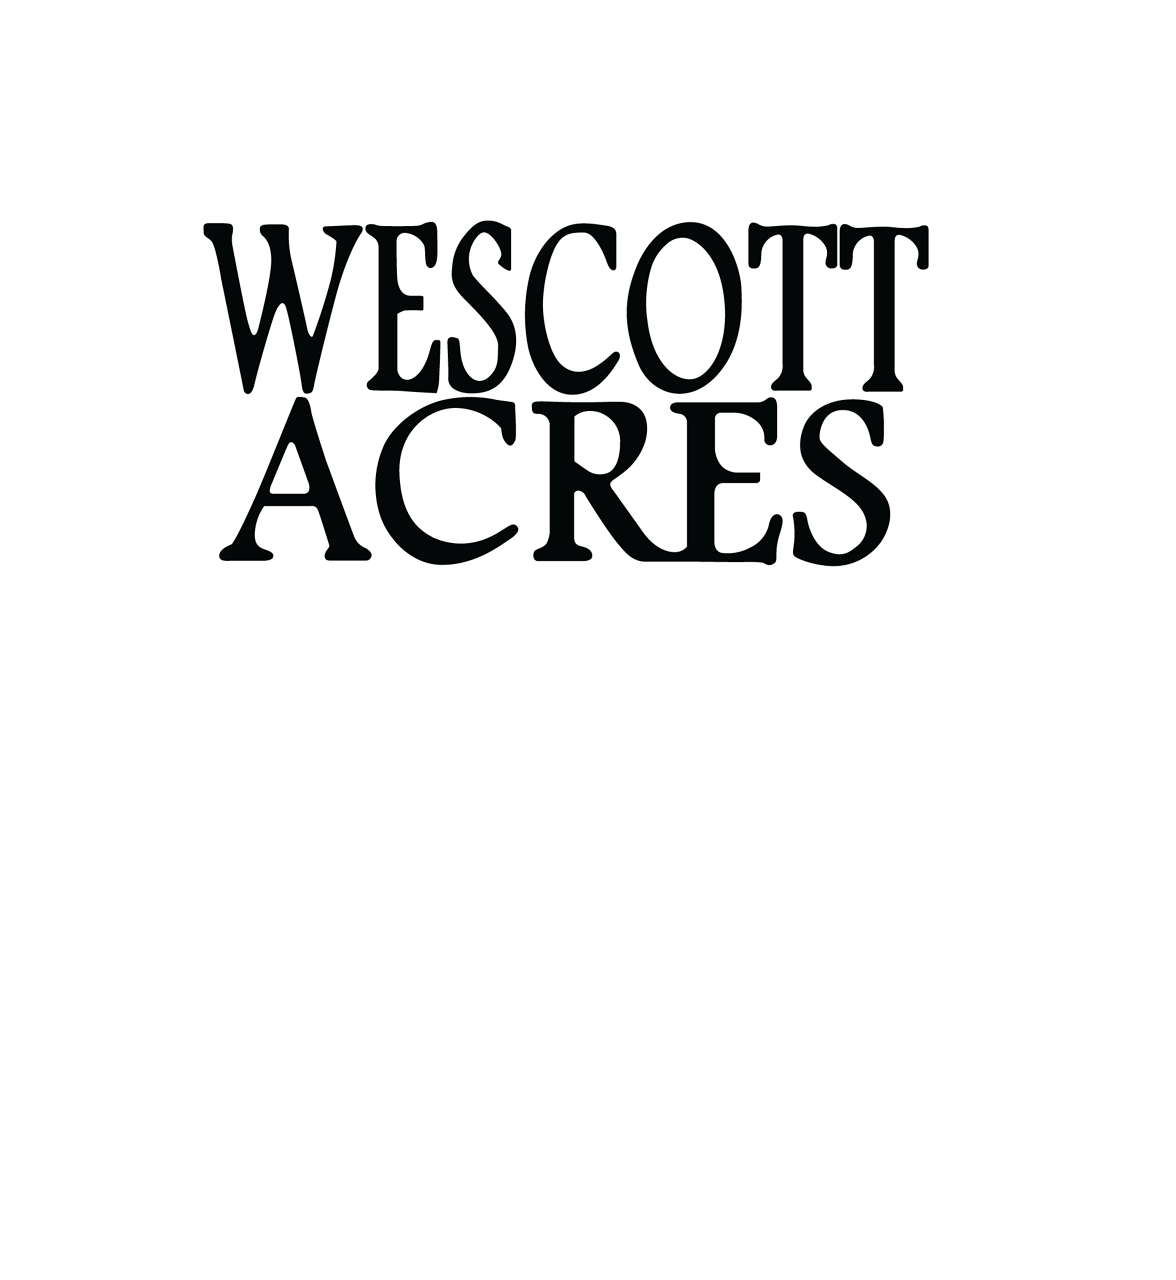 Wescott Acres Luxury Pet Resort Logo